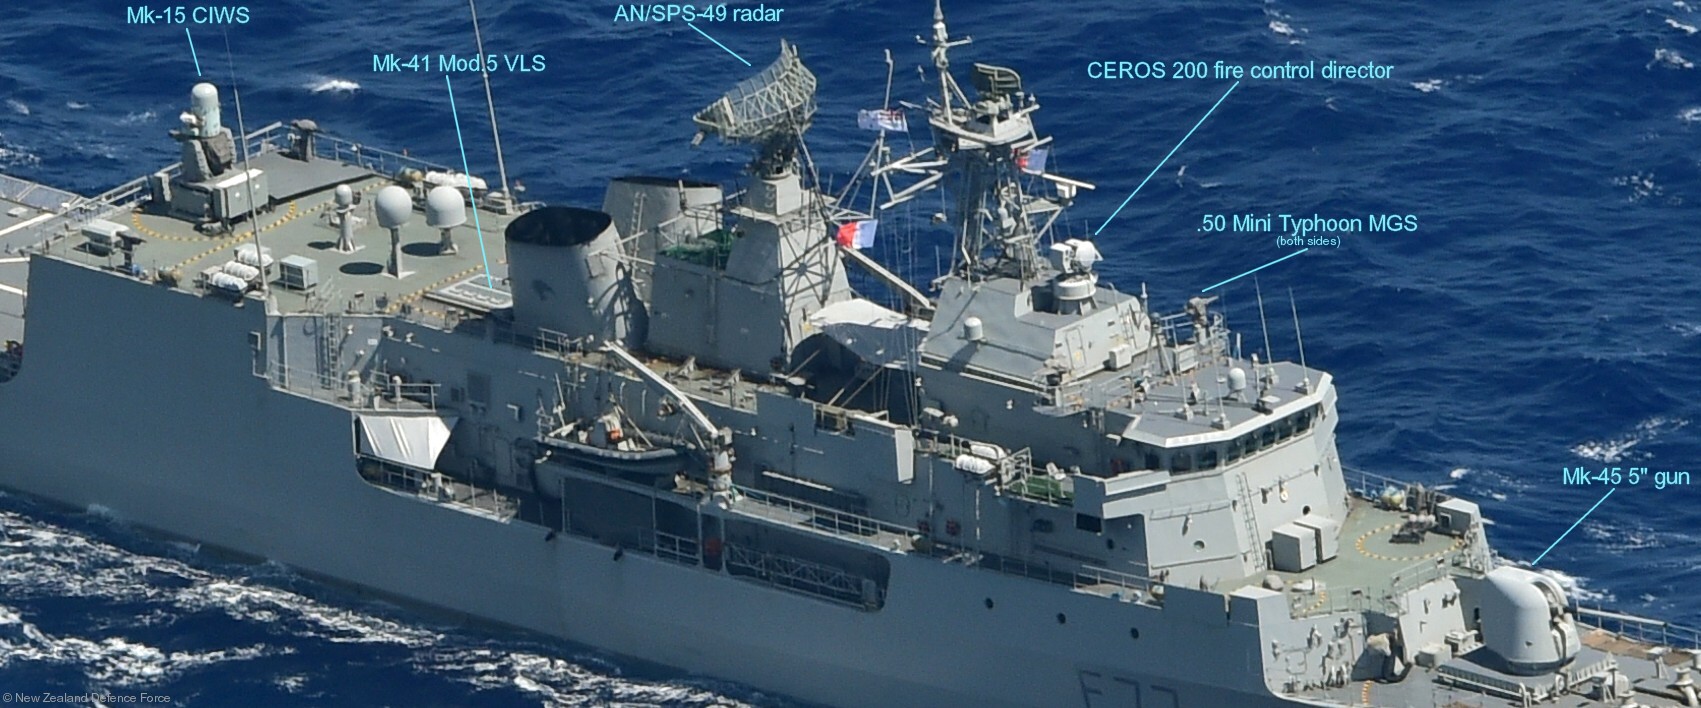 anzac class frigate new zealand navy armament mk-45 gun mk-41 vls sea sparrow essm sam missile mini typhoon mgs